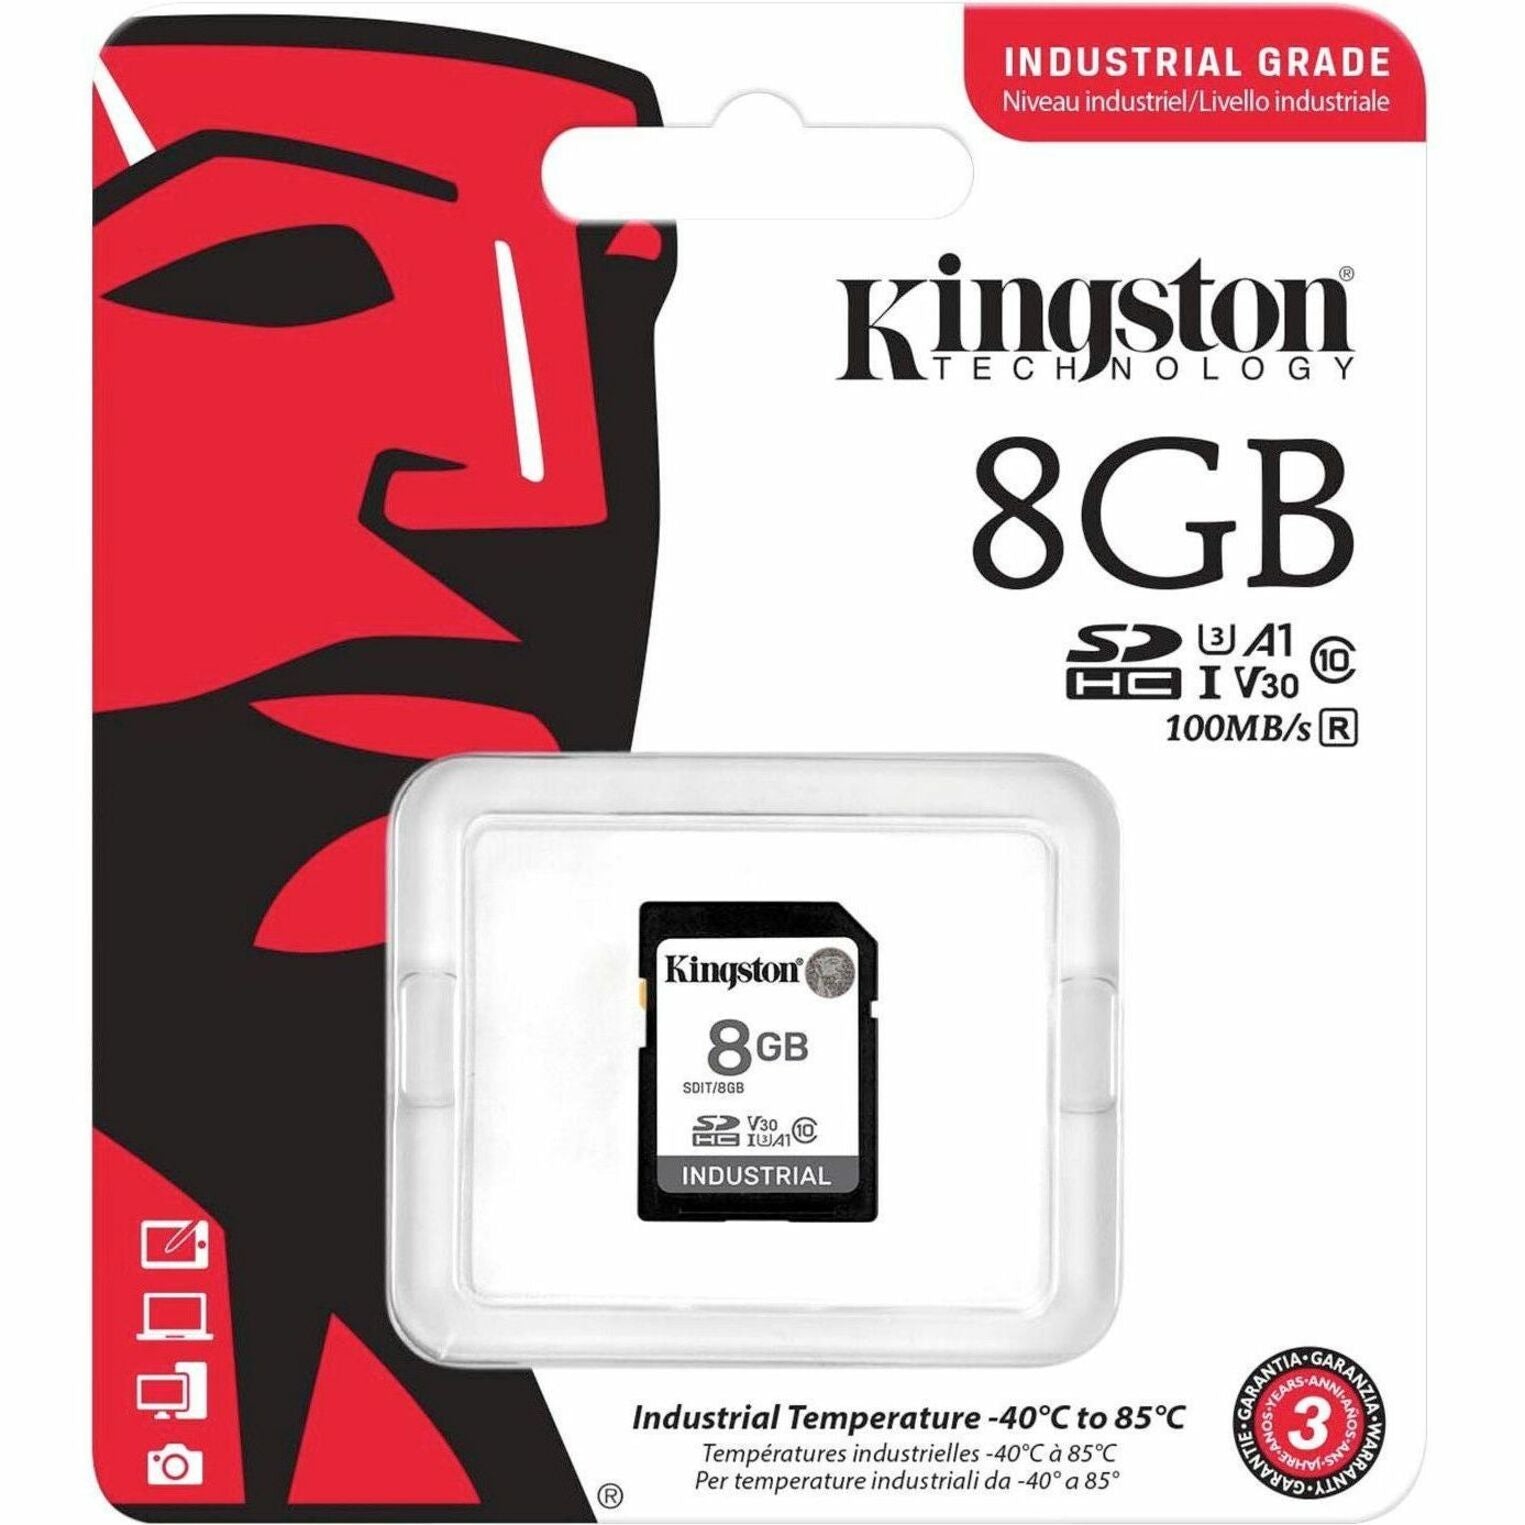 Kingston SDIT/8GB Industrial SDHC Memory Card, 8GB, Class 10/UHS-I (U3), V30, 100 MB/s